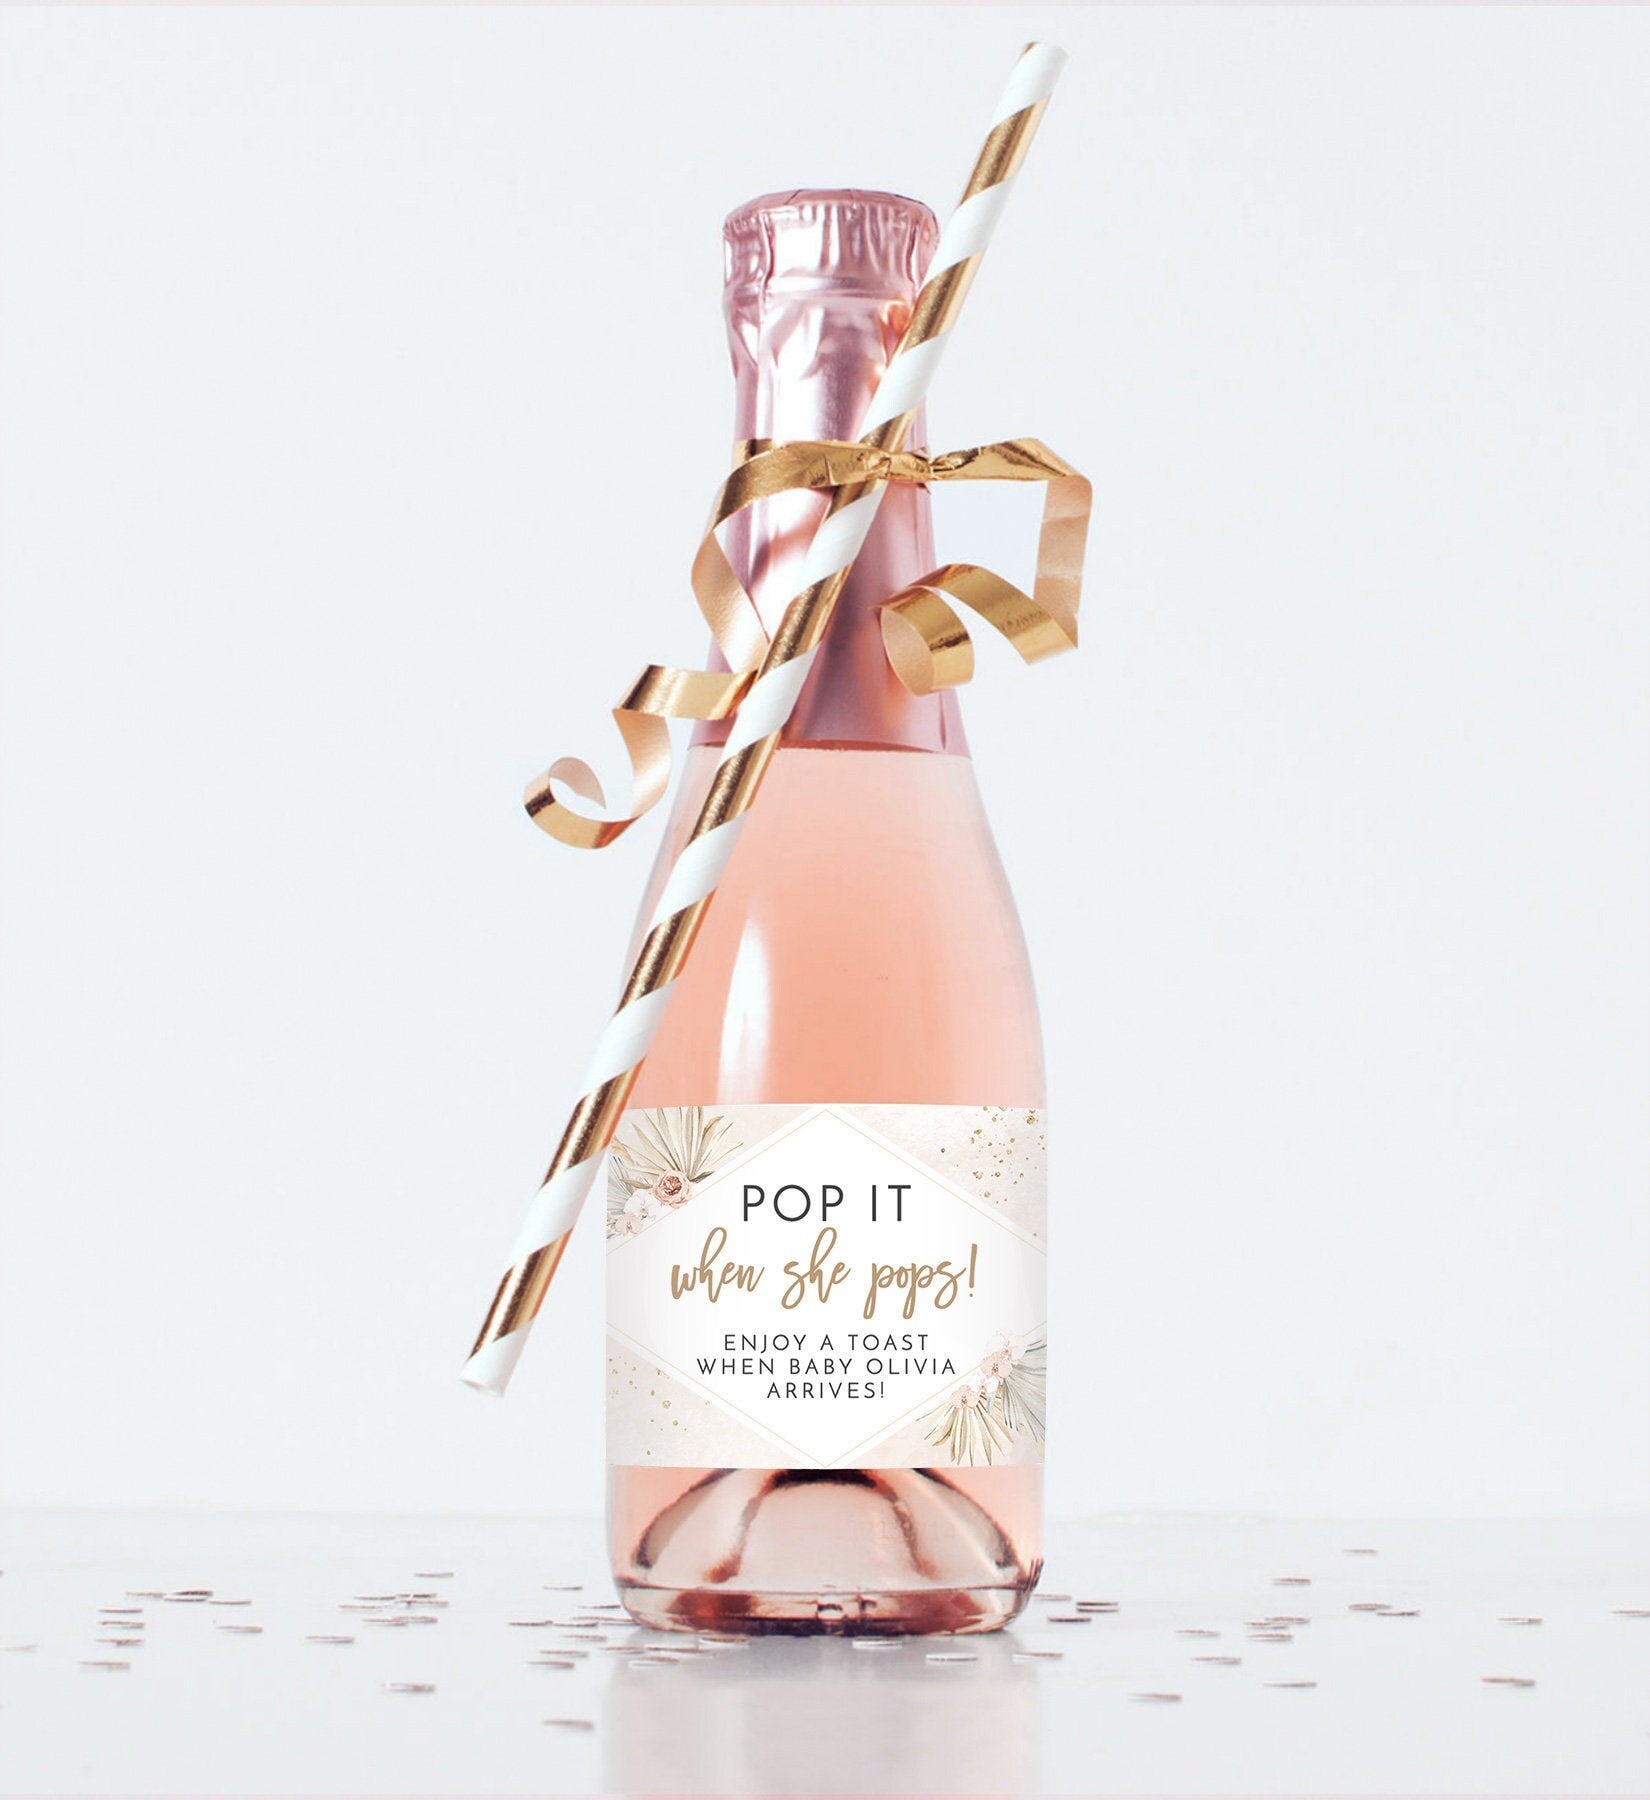 Minimalist Baby Shower Champagne Label, Wine Label, Simple, Modern, Canva  Template, Mini Prosecco, Pop It When She Pops, Printable, BSMN01 